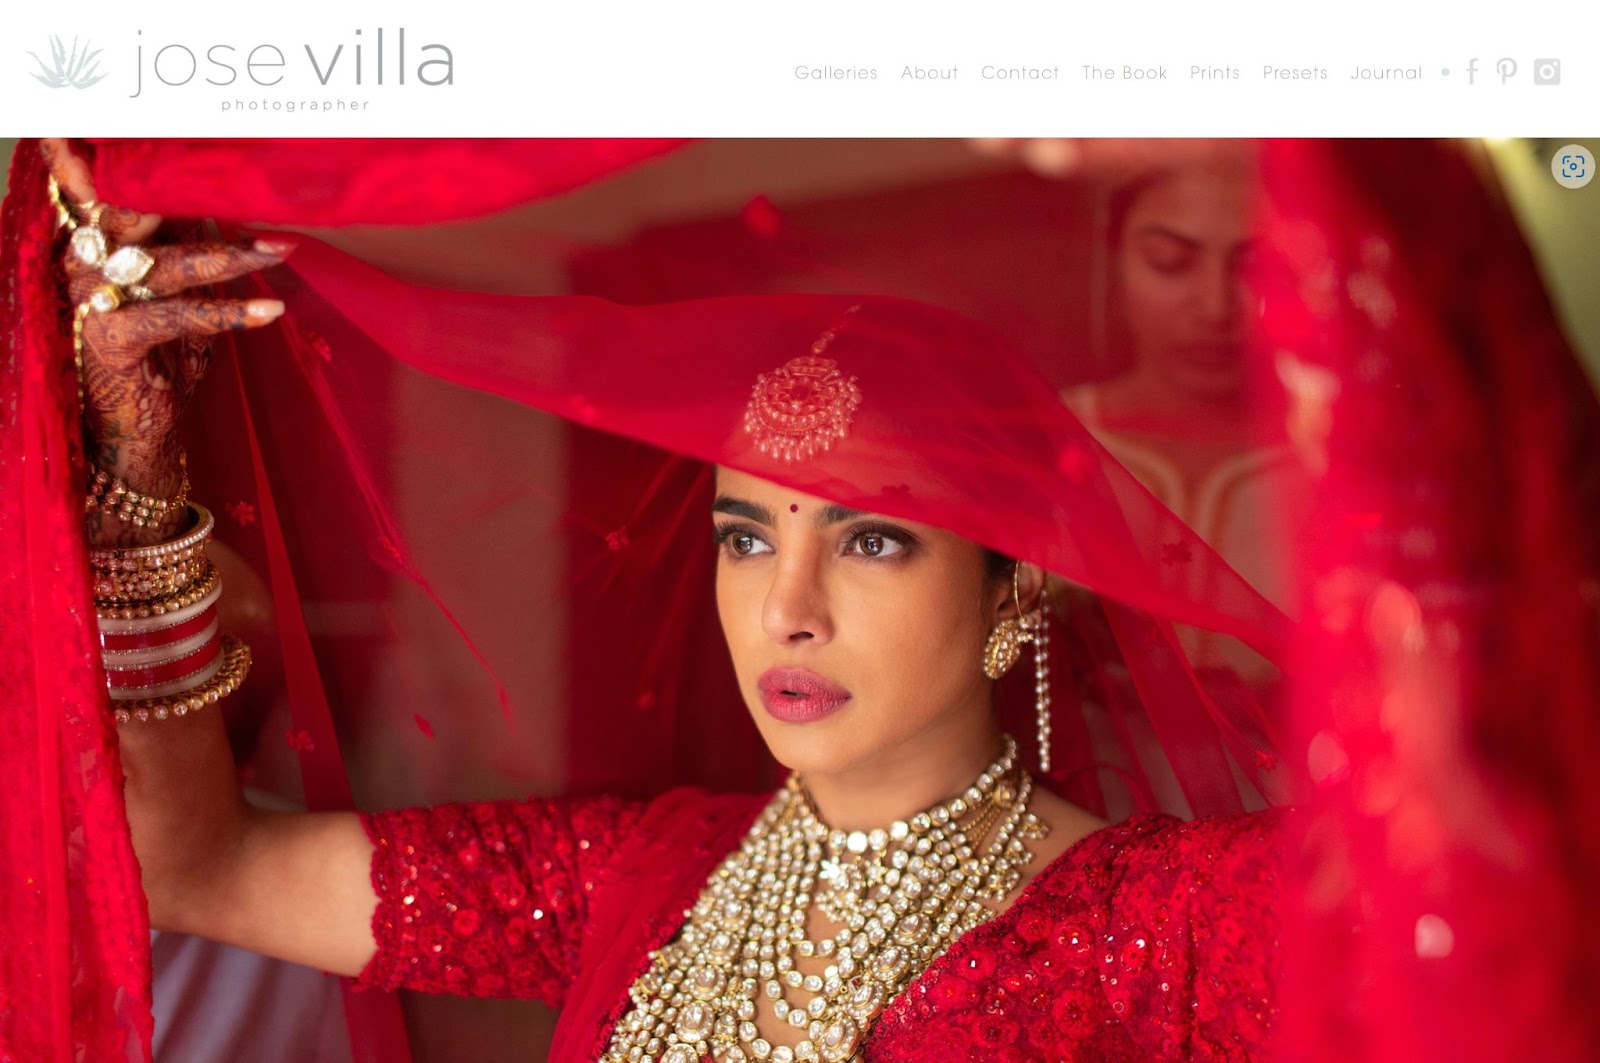 Jose Villa photography homepage.